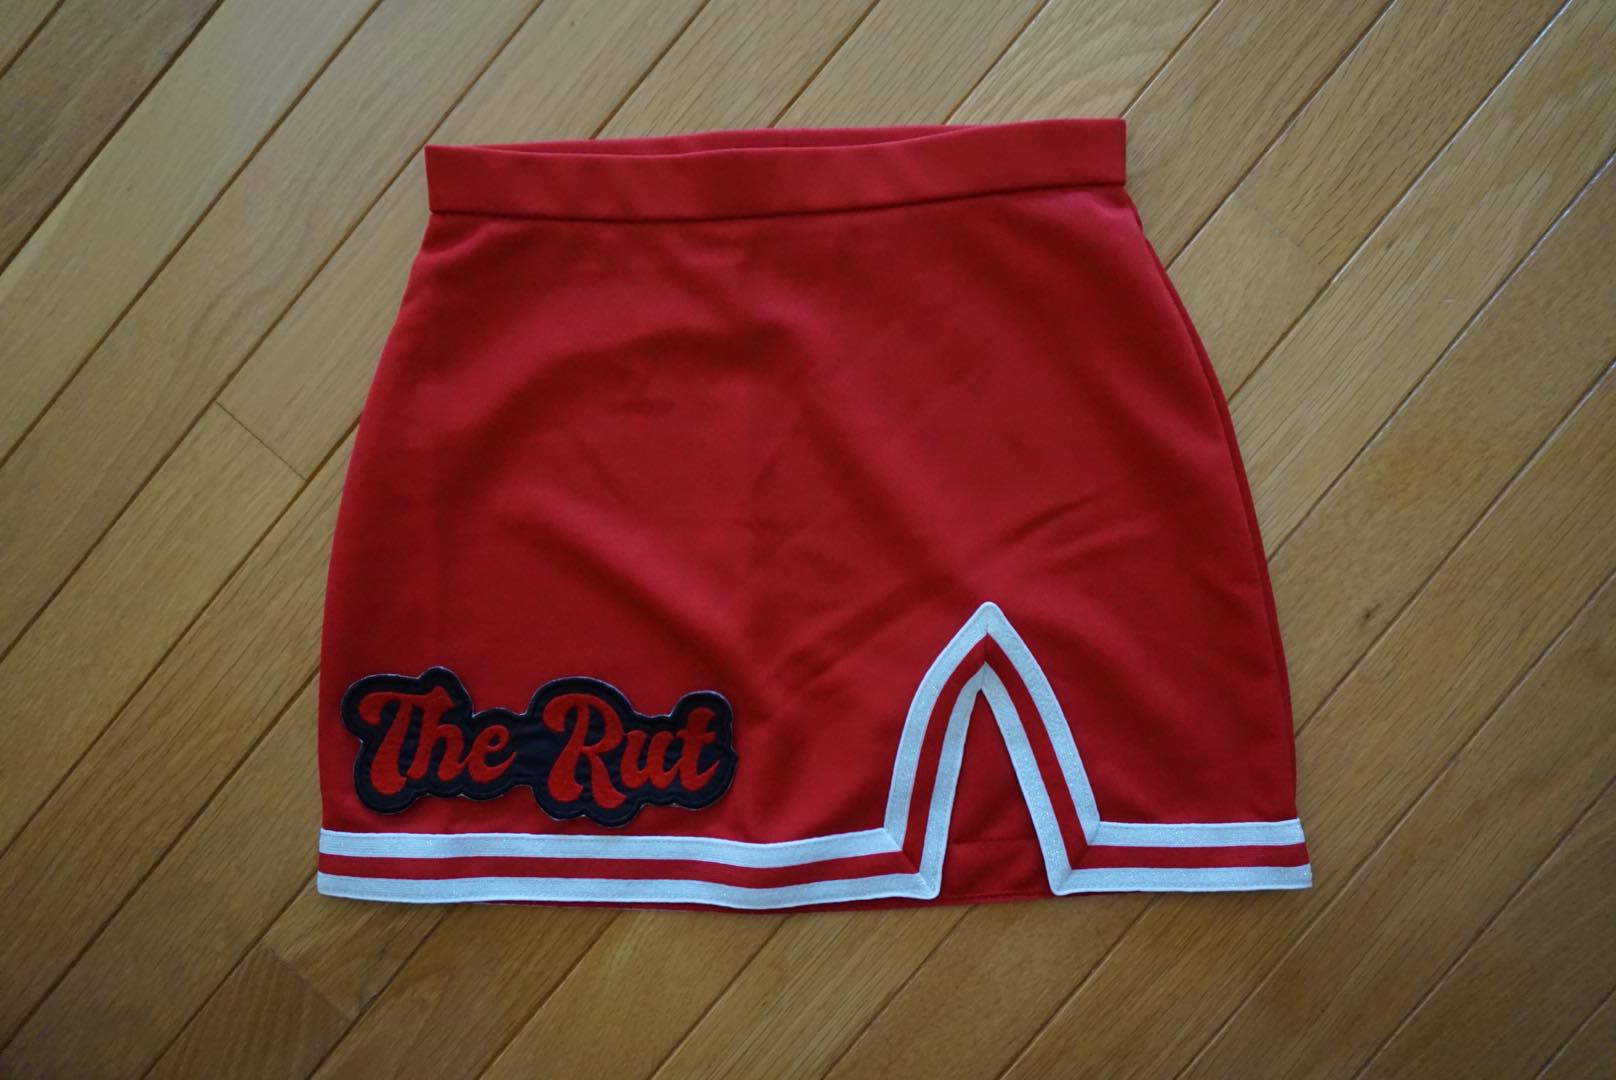 'The Rut' Tailgate Skirt